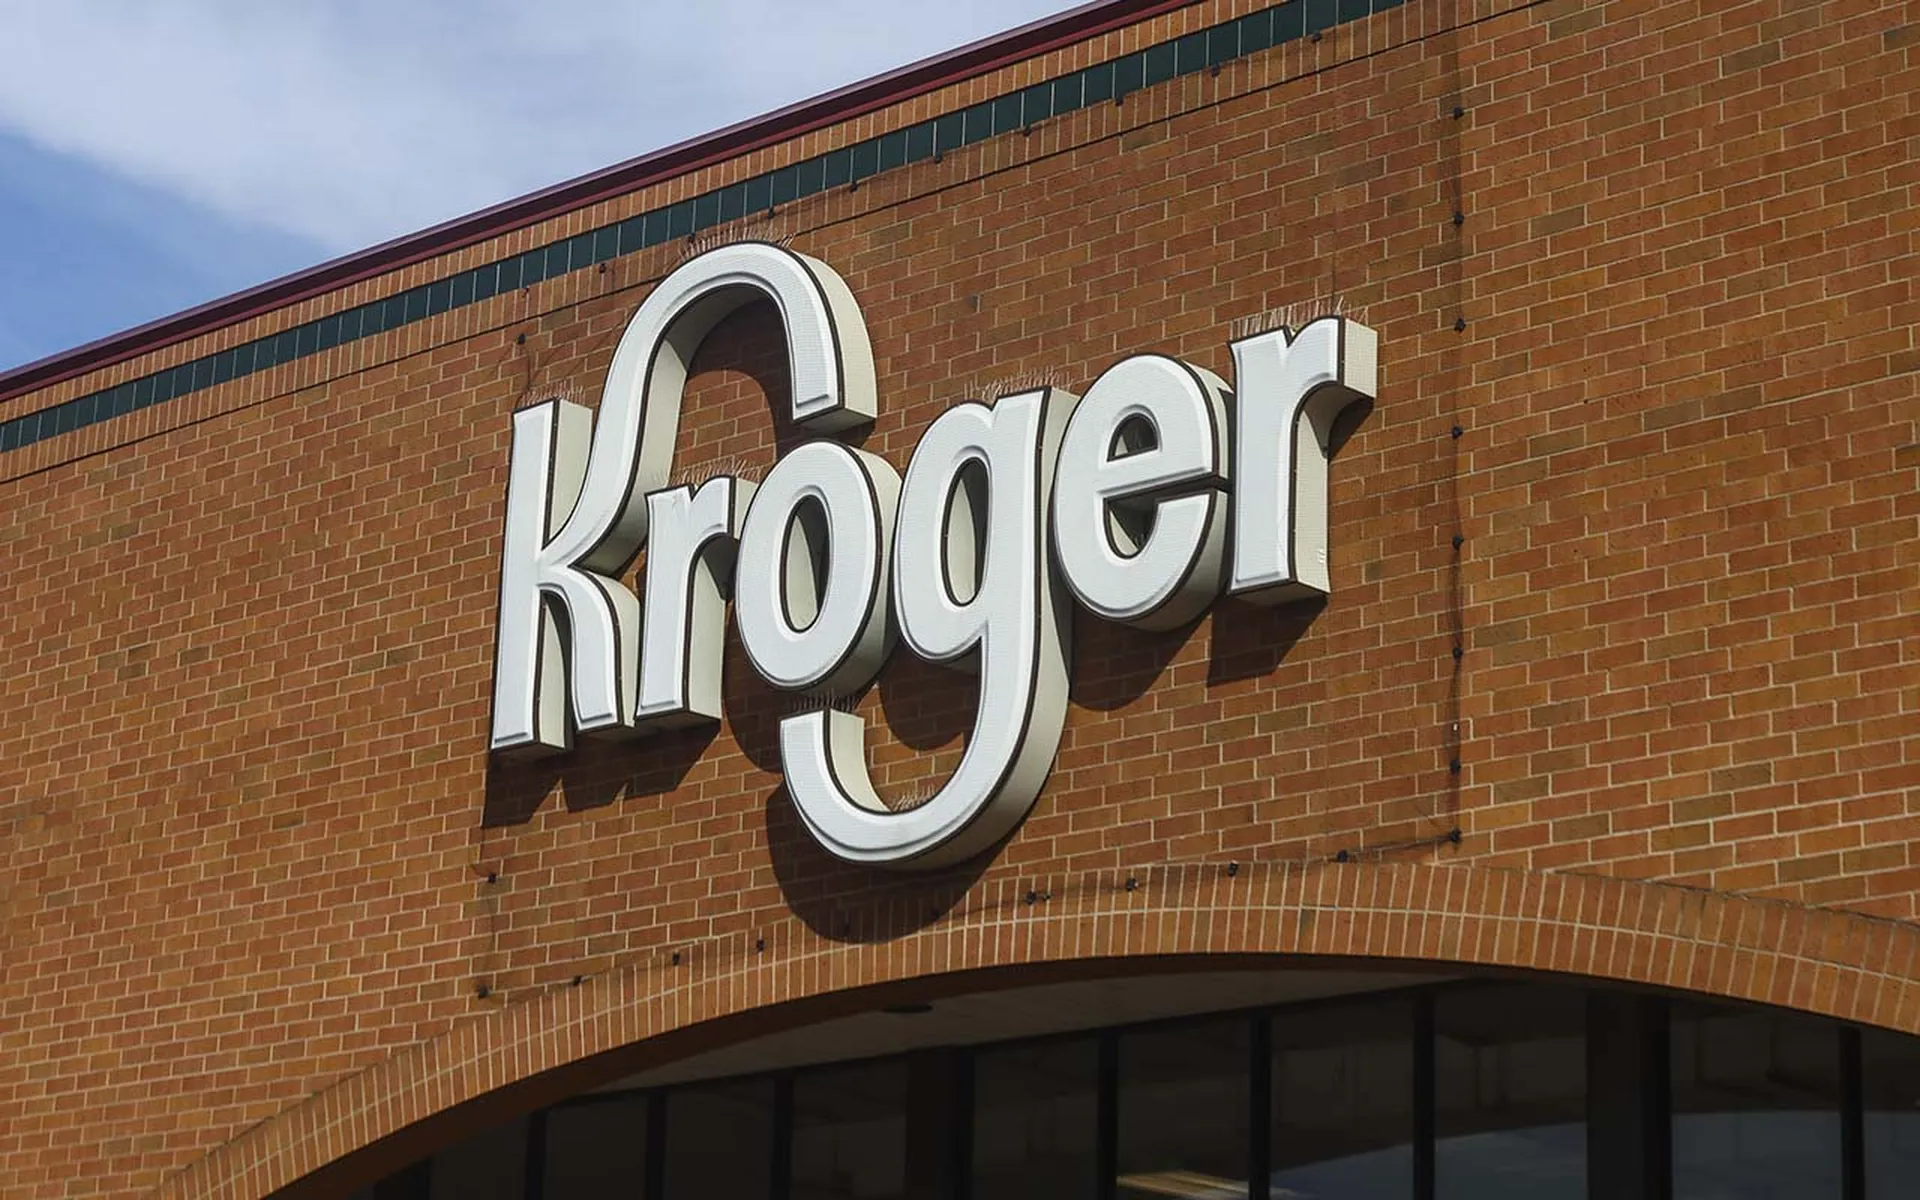 The Kroger logo is displayed on a storefront.